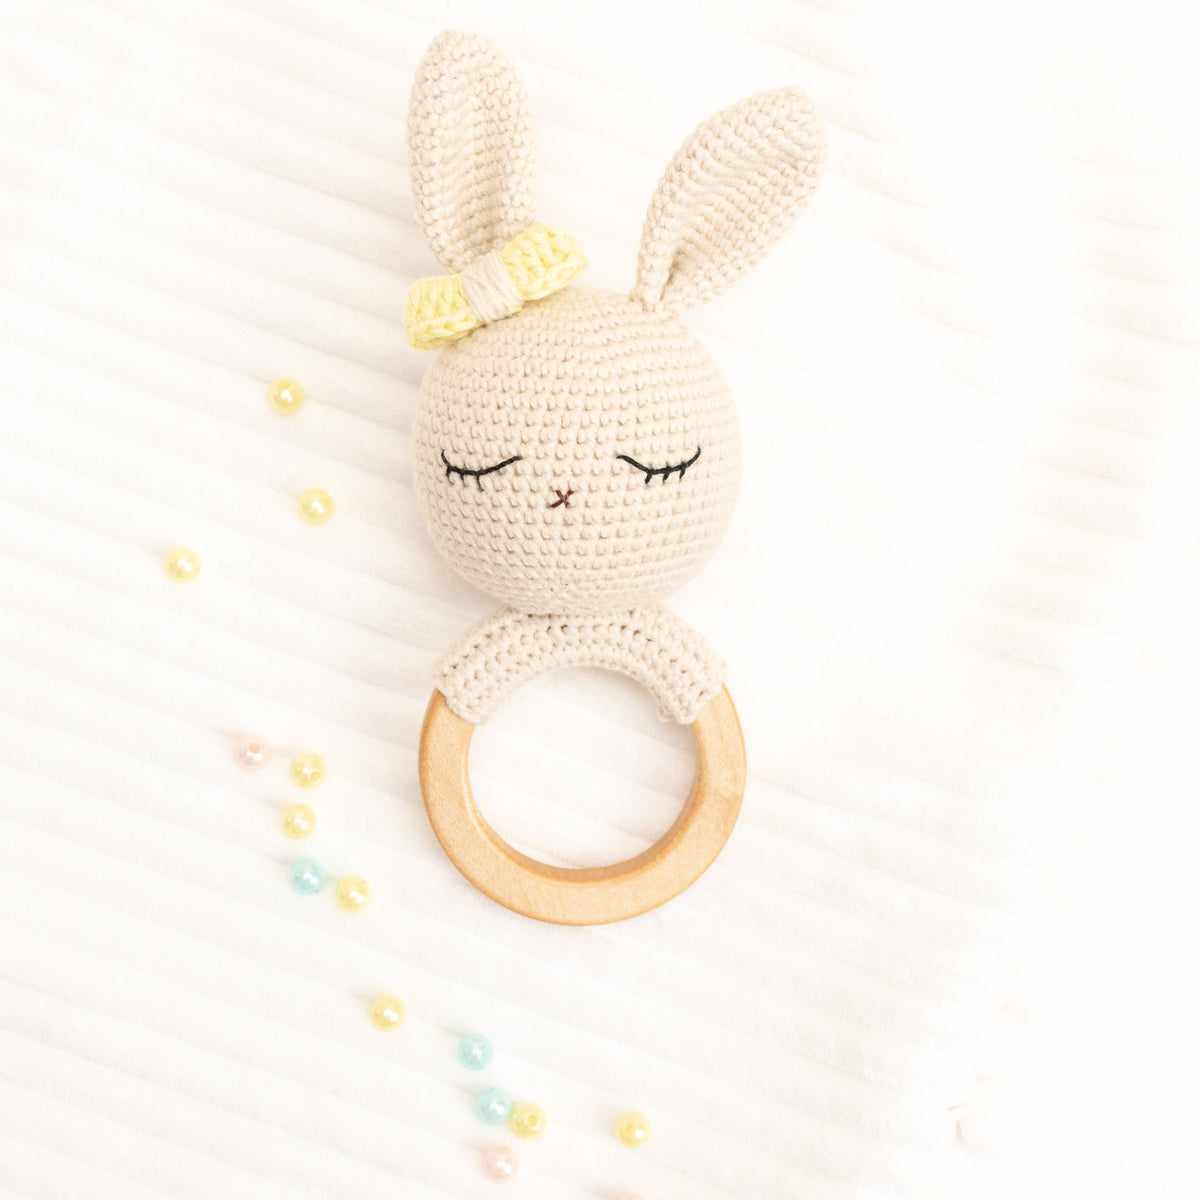 Crochet Rattle / chloe the bunny (teether style) by Little Moy